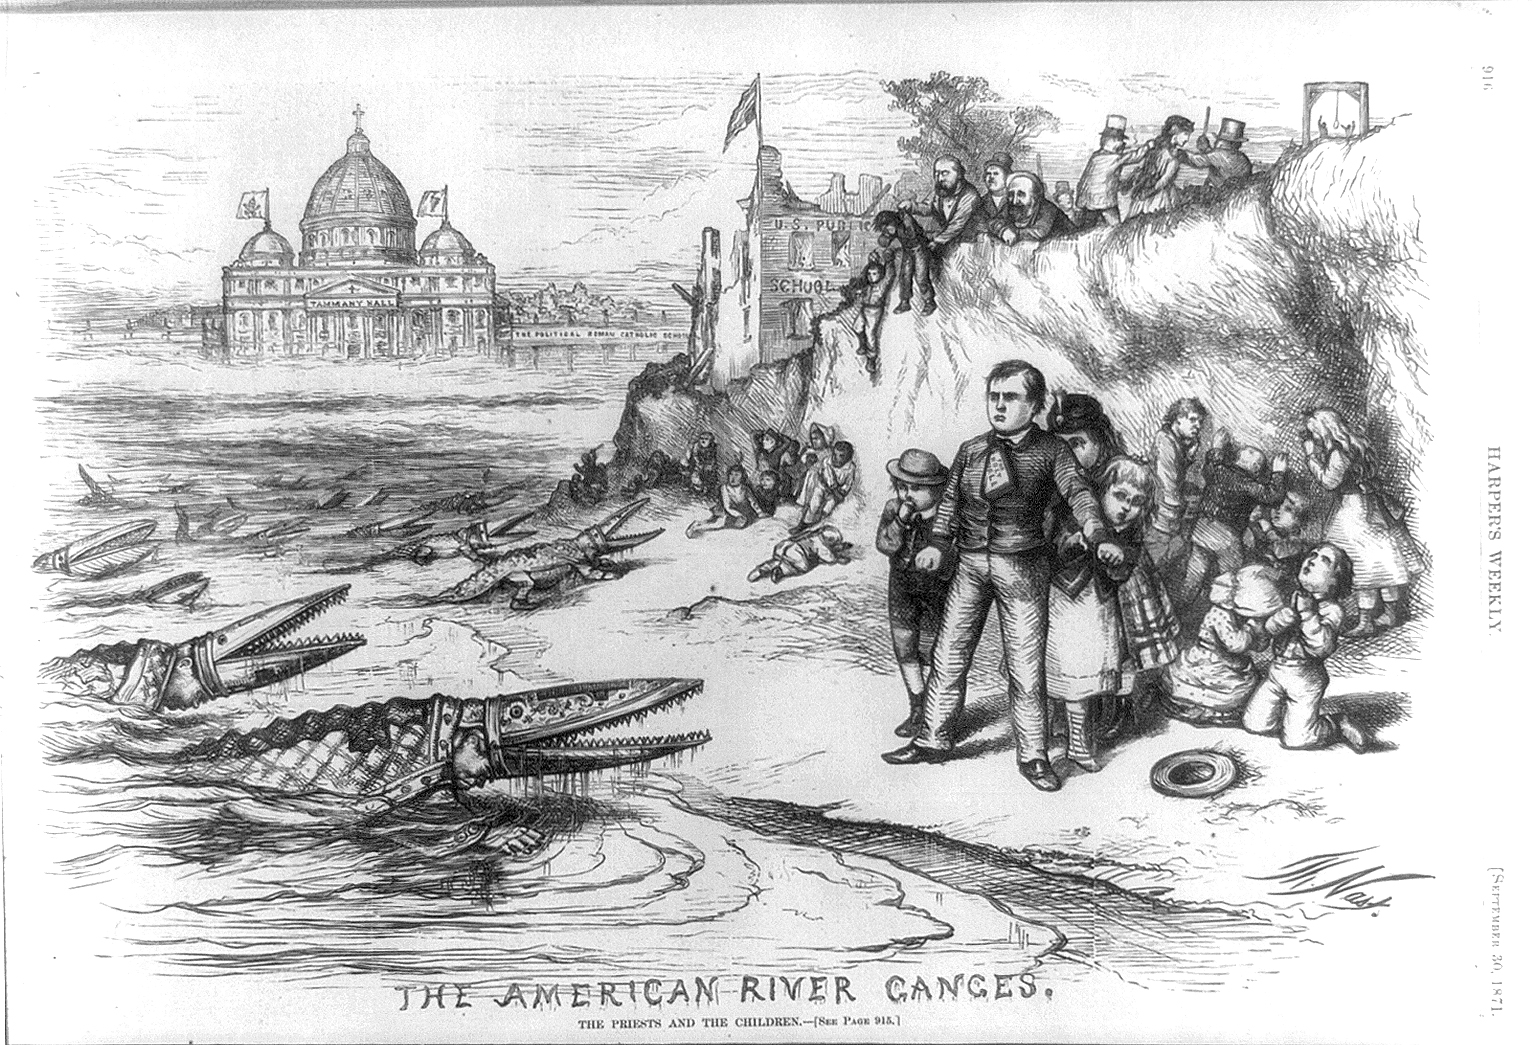 The American River Ganges( Американская река Ганг )